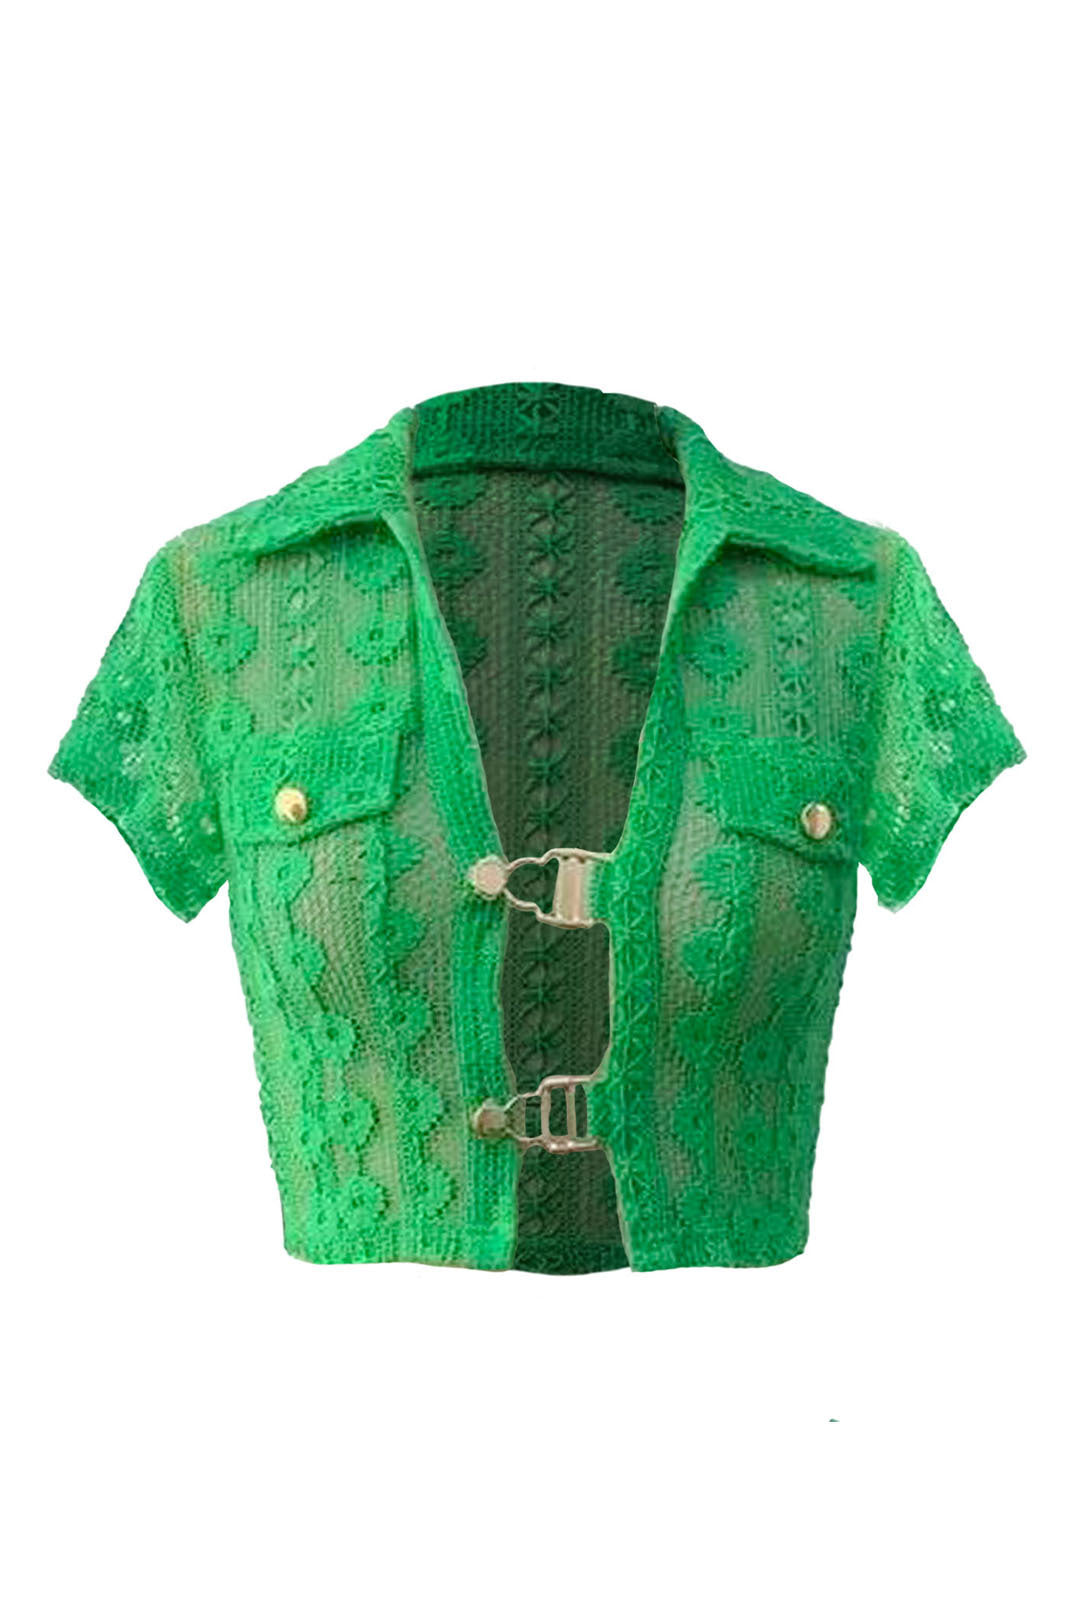 Jagger Green 70s Lace Crochet Top